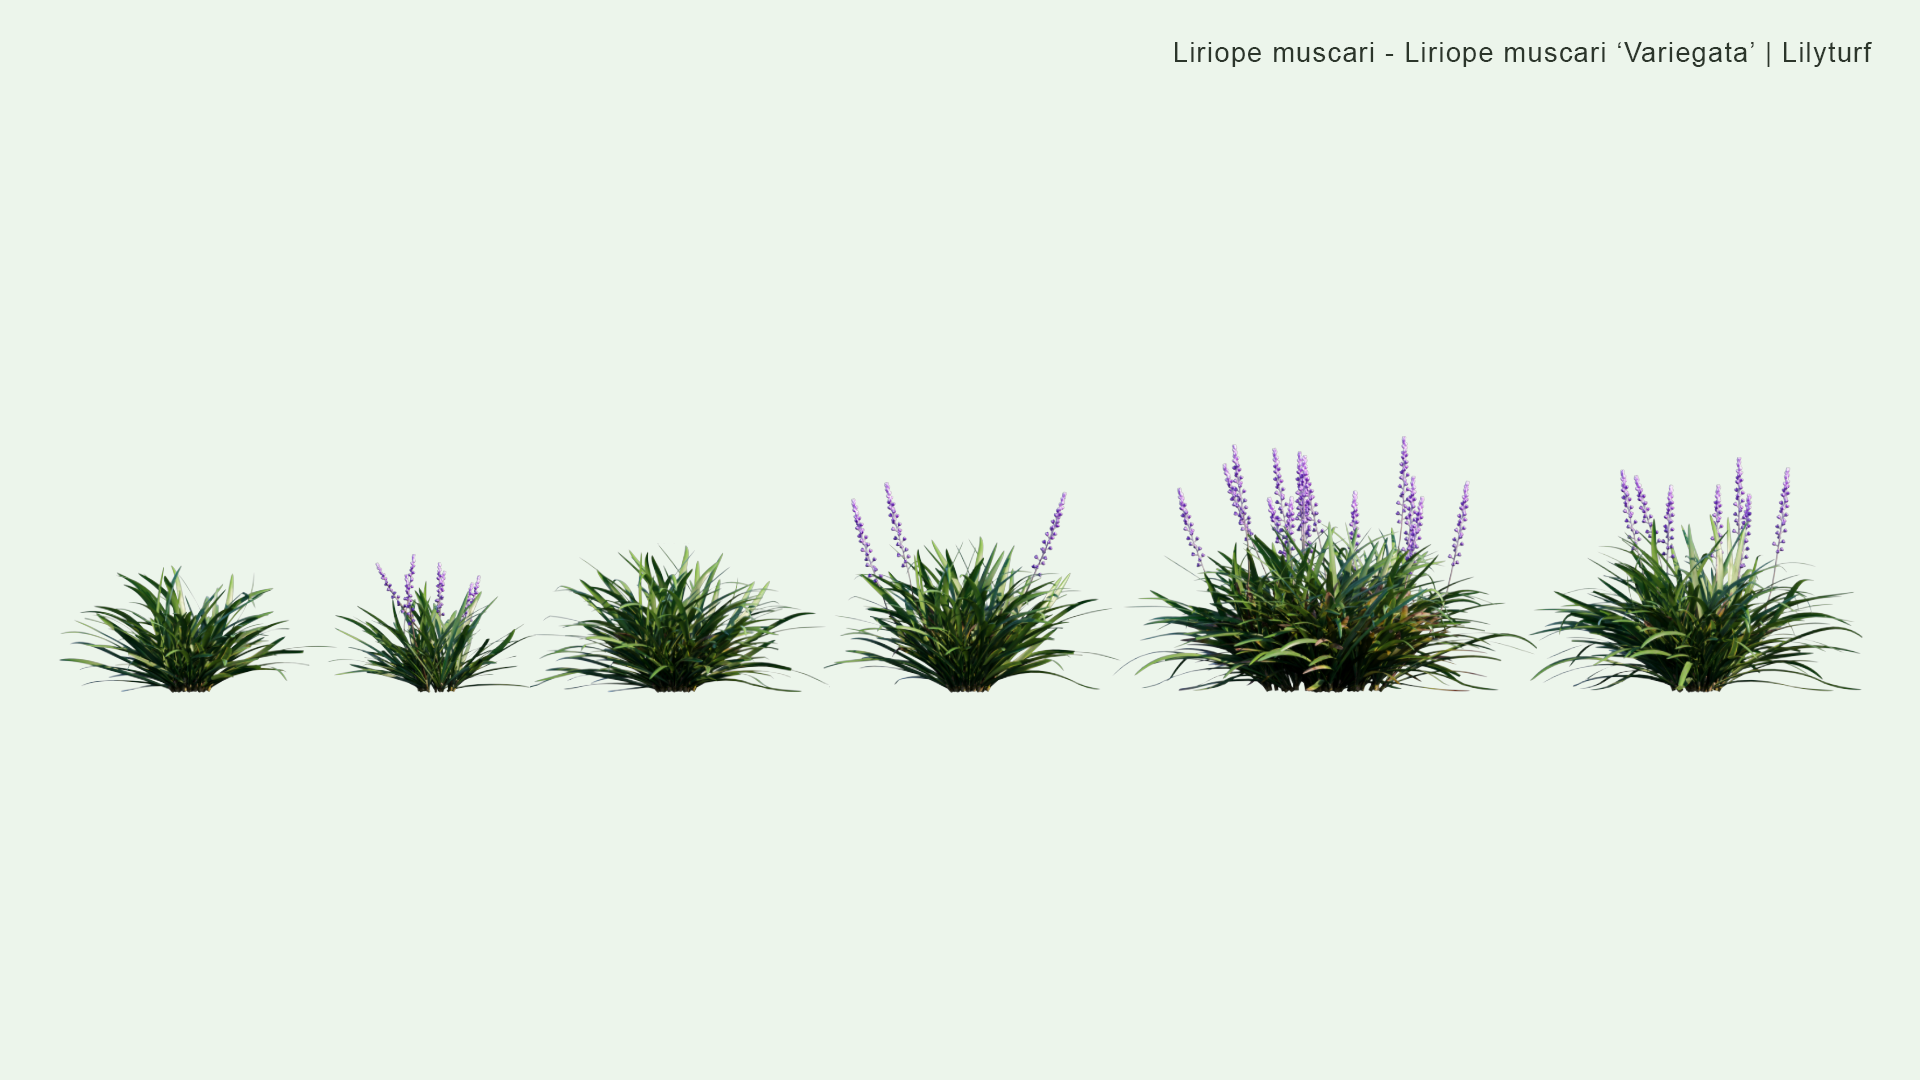 2D Liriope Muscari, Liriope Muscari 'Variegata' - Big Blue Lilyturf, Lilyturf, Border Grass, Monkey Grass